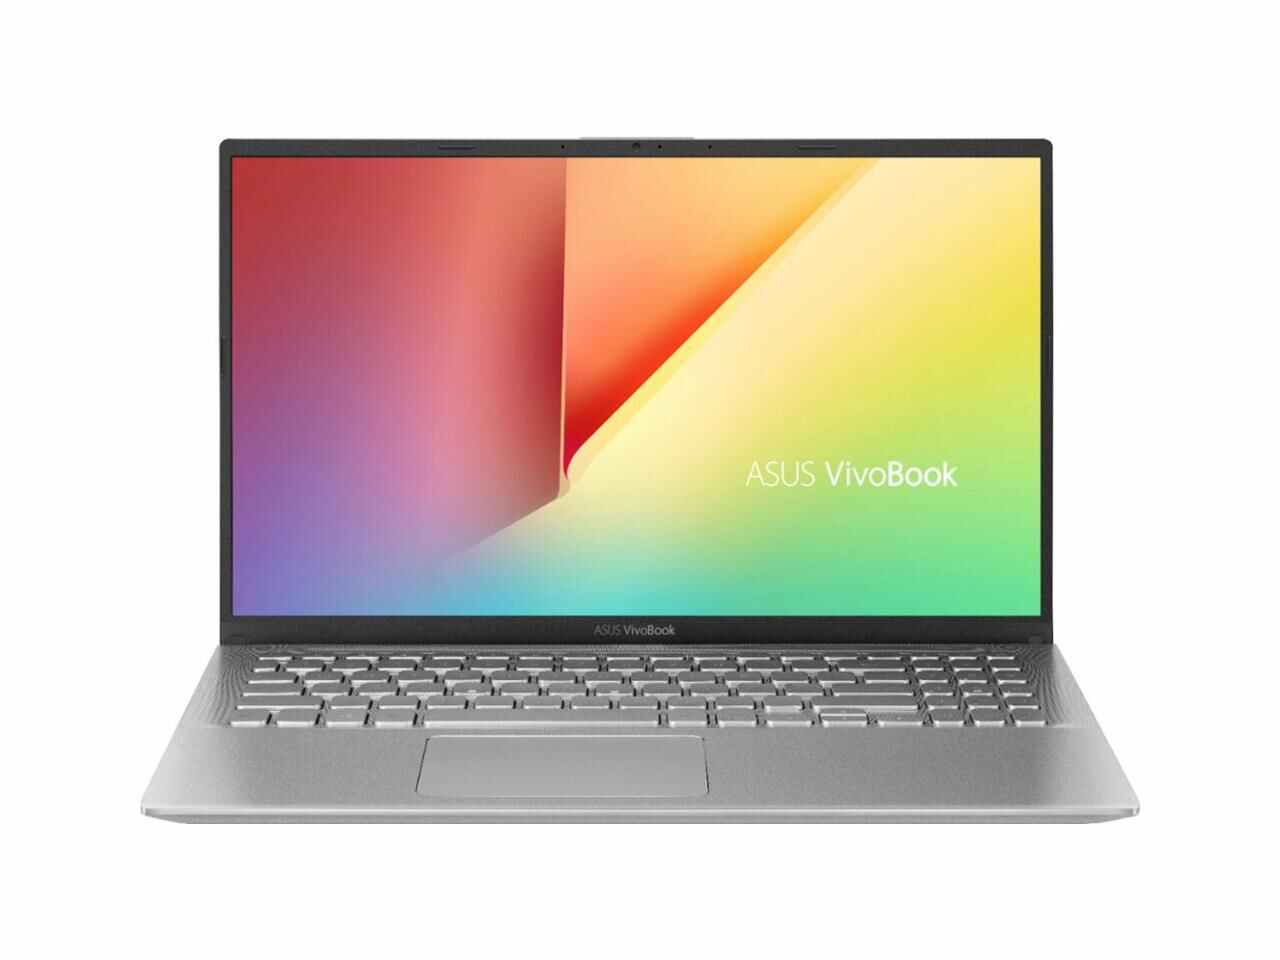 Asus VivoBook 15.6\" Full HD (1920 x 1080) Laptop (AMD Ryzen 7 3700U Processor, 12GB Memory, AMD Radeon RX Vega 10, 512GB SSD, Windows 10 Home, Transparent Silver)